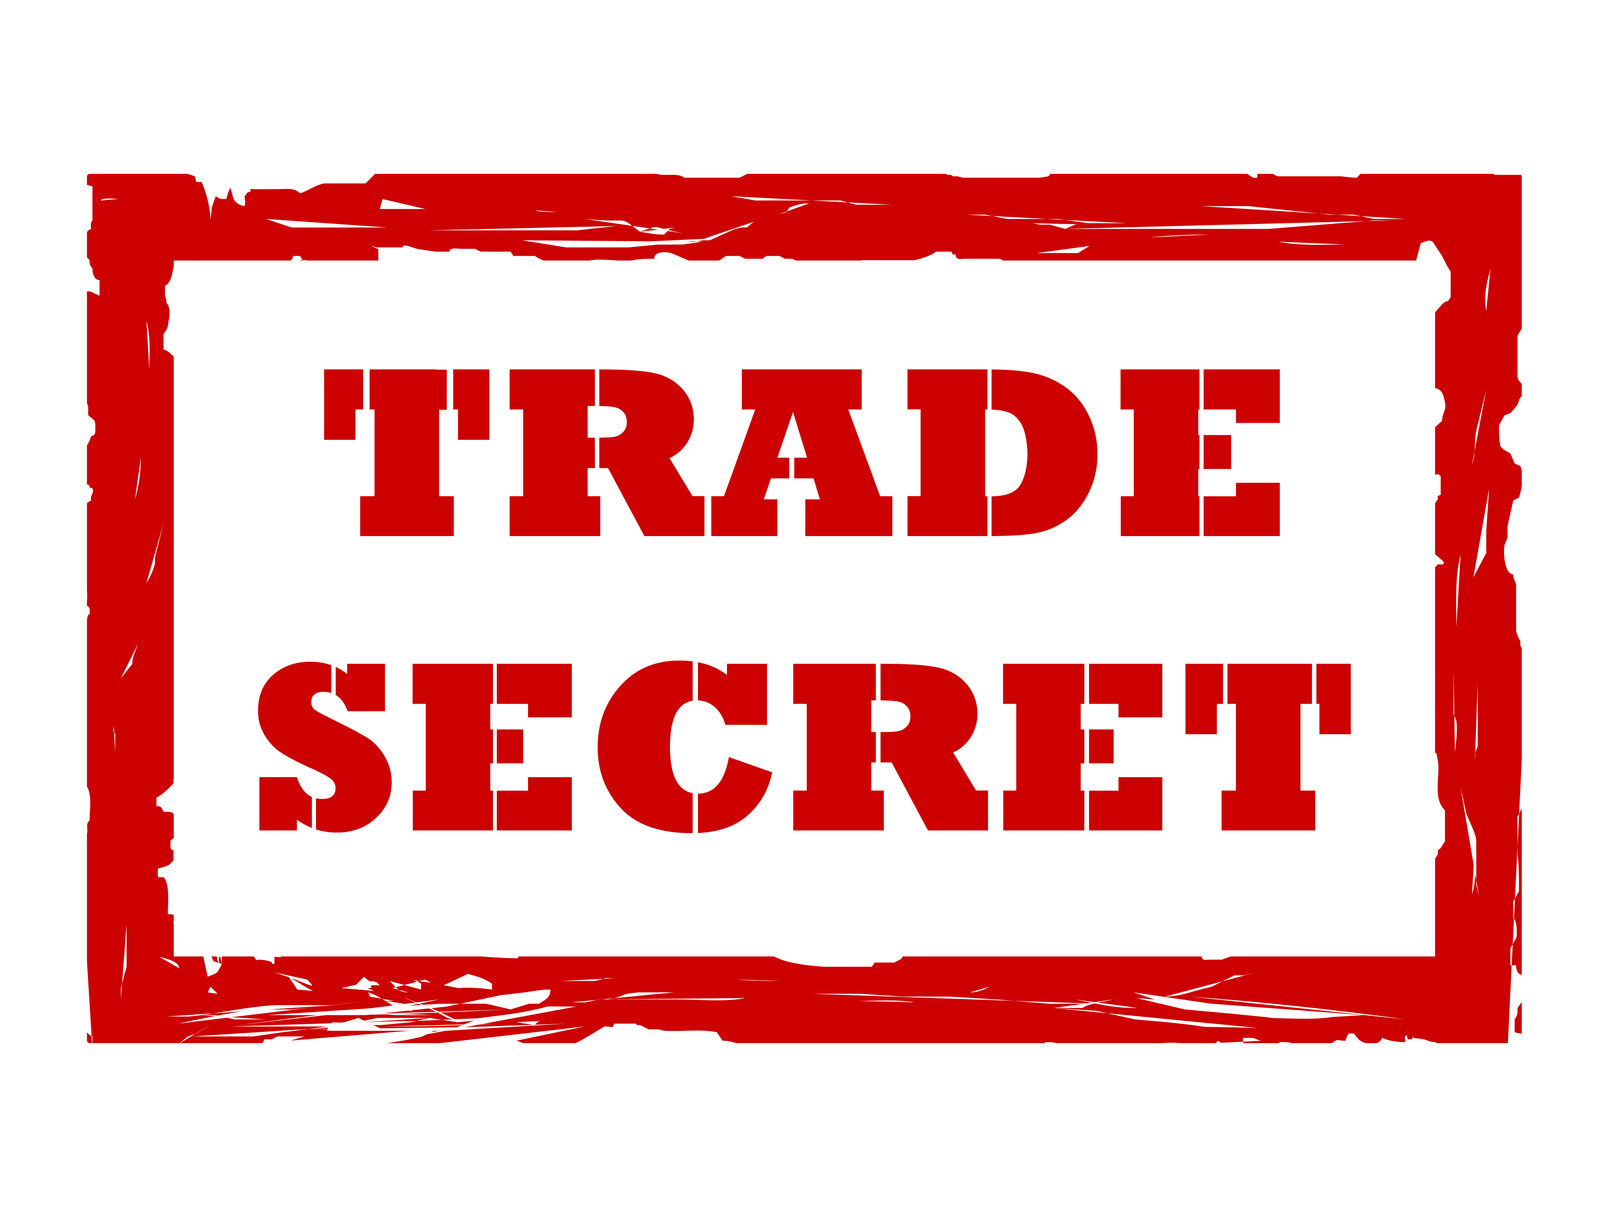 sussssh-thats-trade-secret